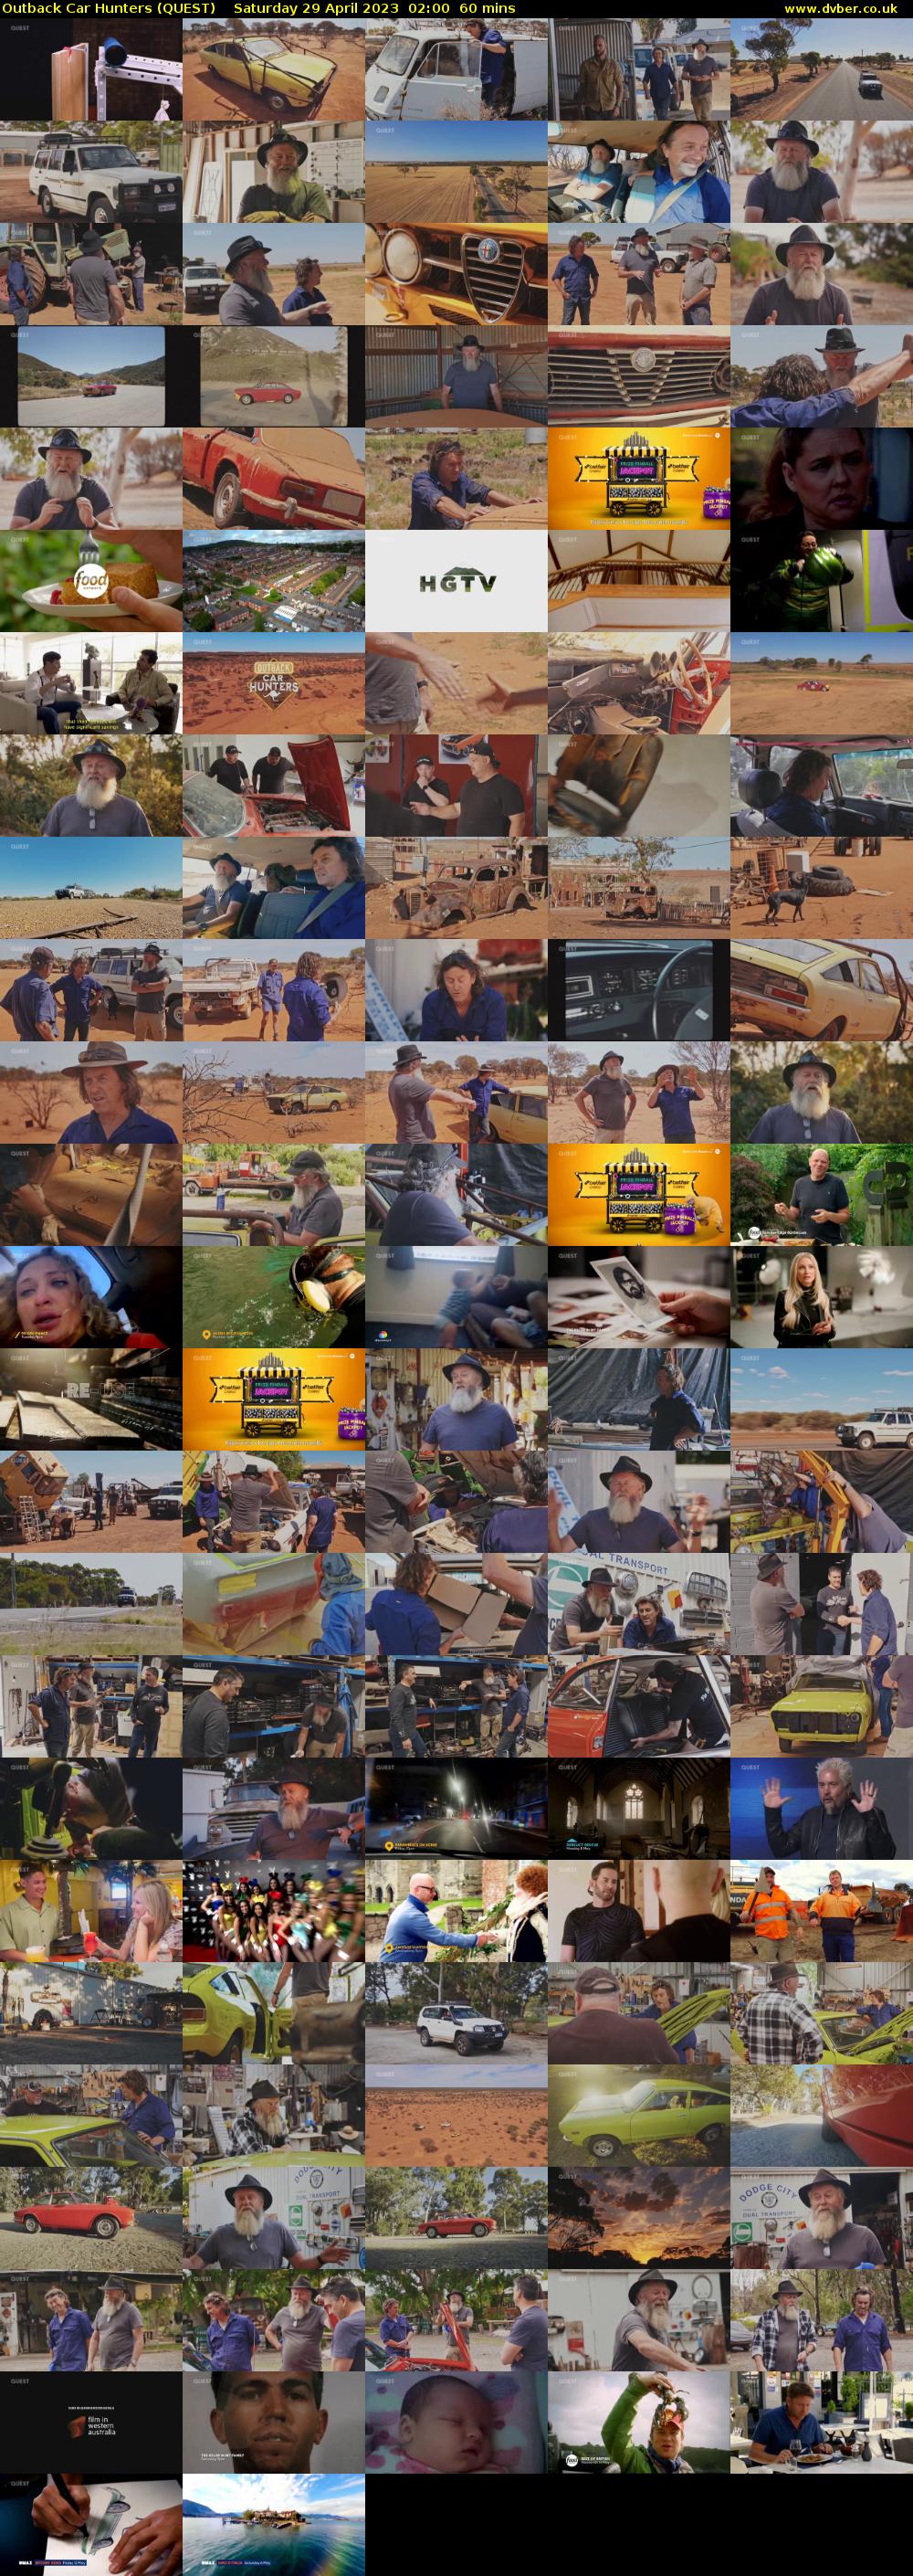 Outback Car Hunters (QUEST) Saturday 29 April 2023 02:00 - 03:00